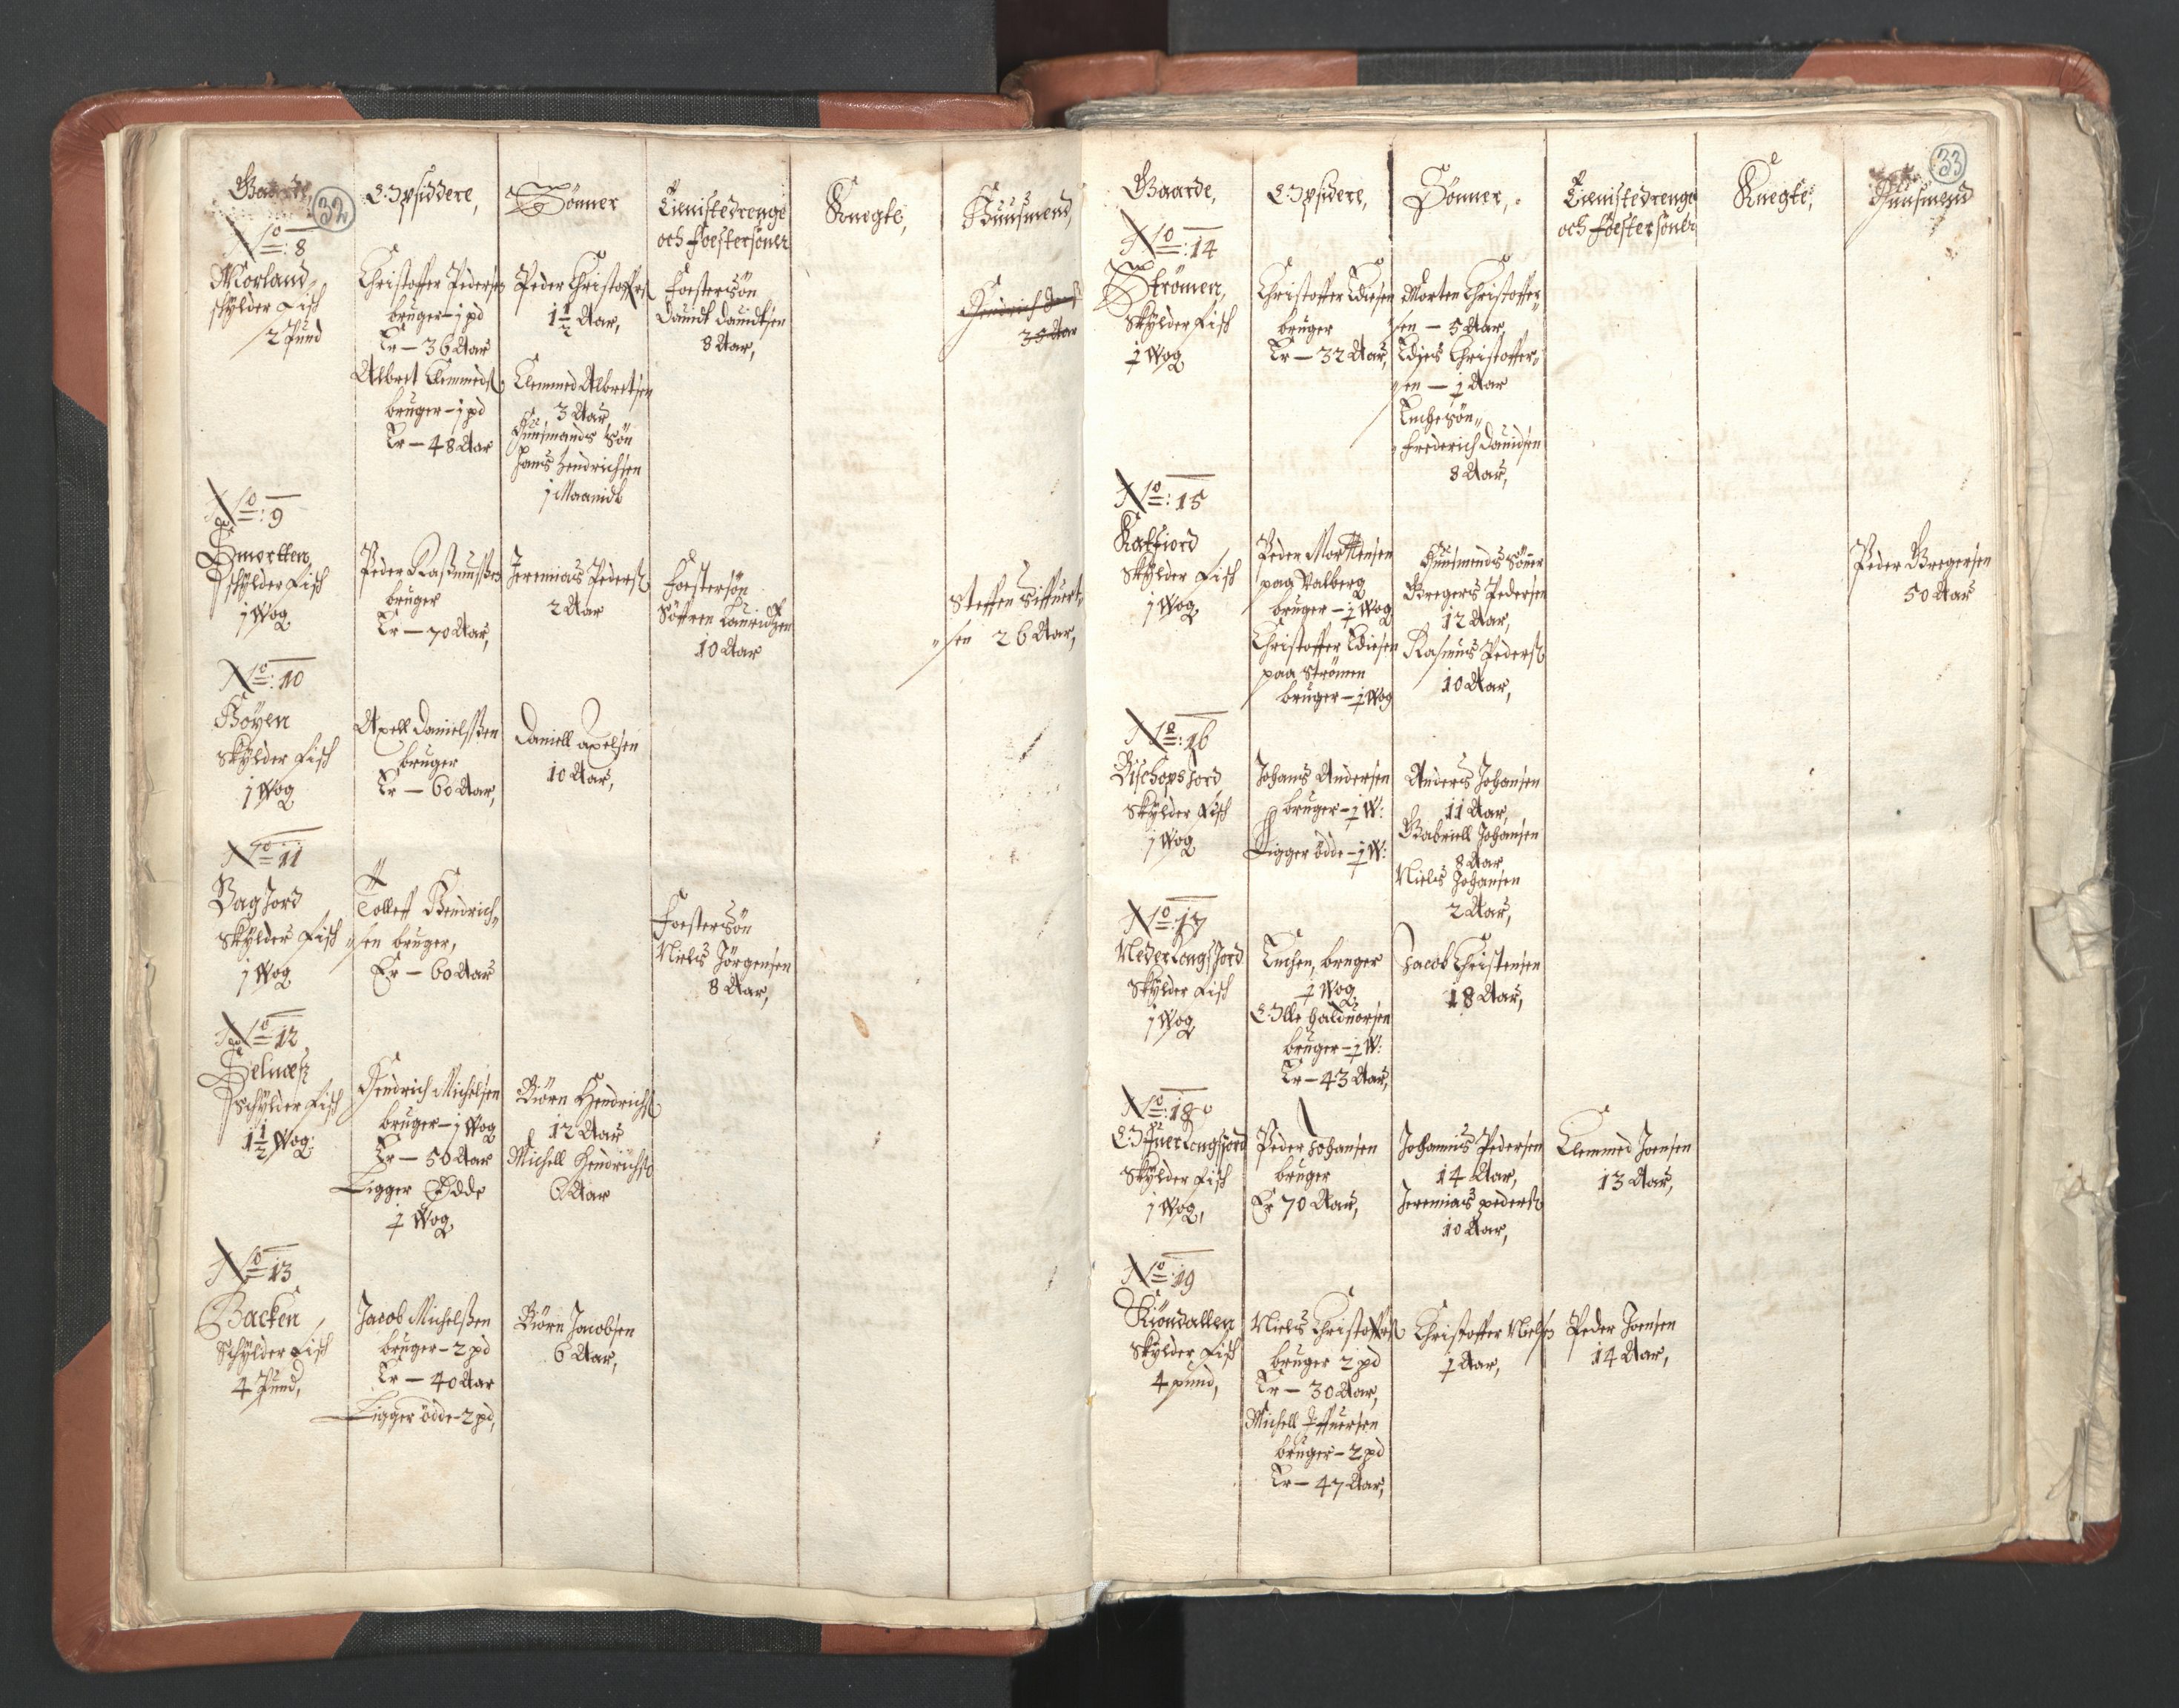 RA, Vicar's Census 1664-1666, no. 36: Lofoten and Vesterålen deanery, Senja deanery and Troms deanery, 1664-1666, p. 32-33